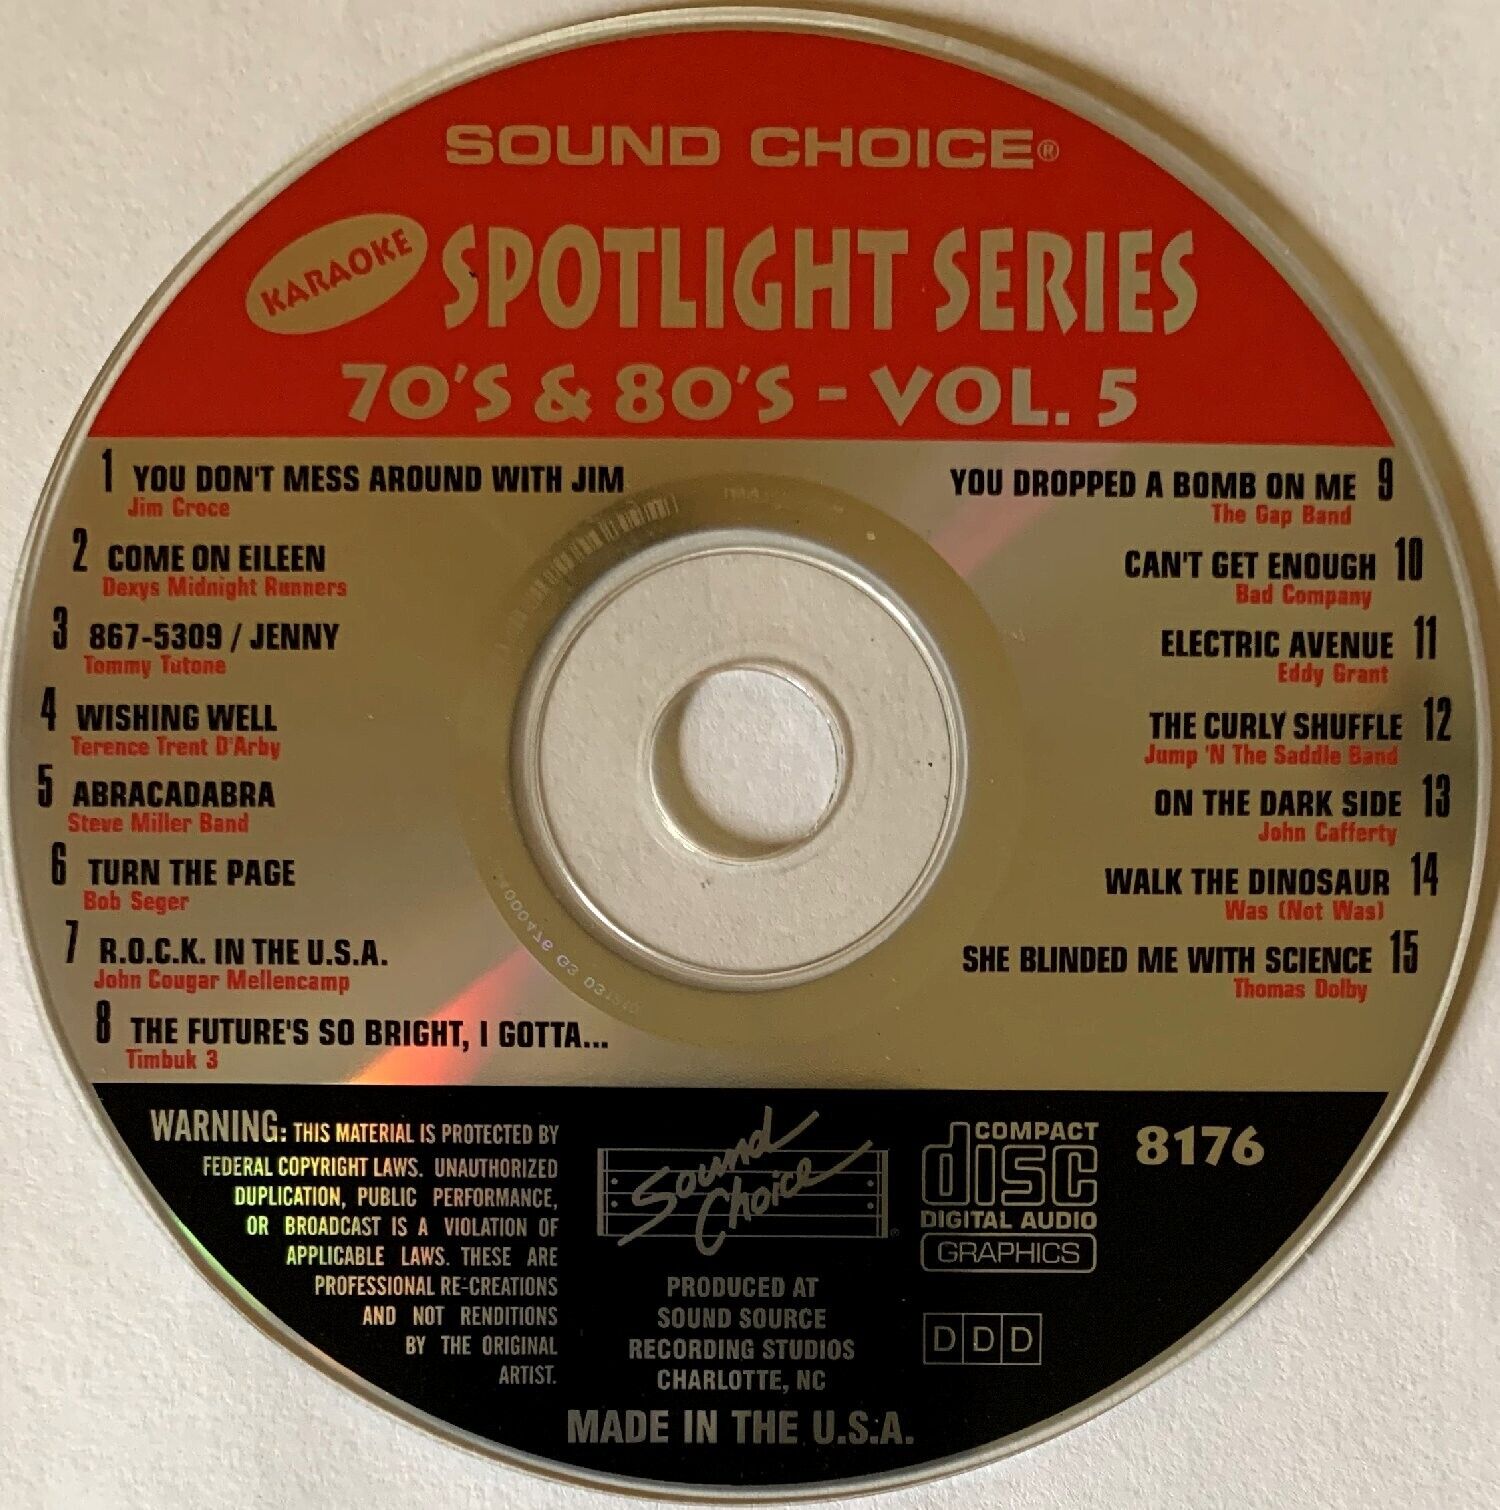 Sound Choice Spotlight - 70's & 80's Vol 5 - Sc8176 - Lot 2103 - Seger